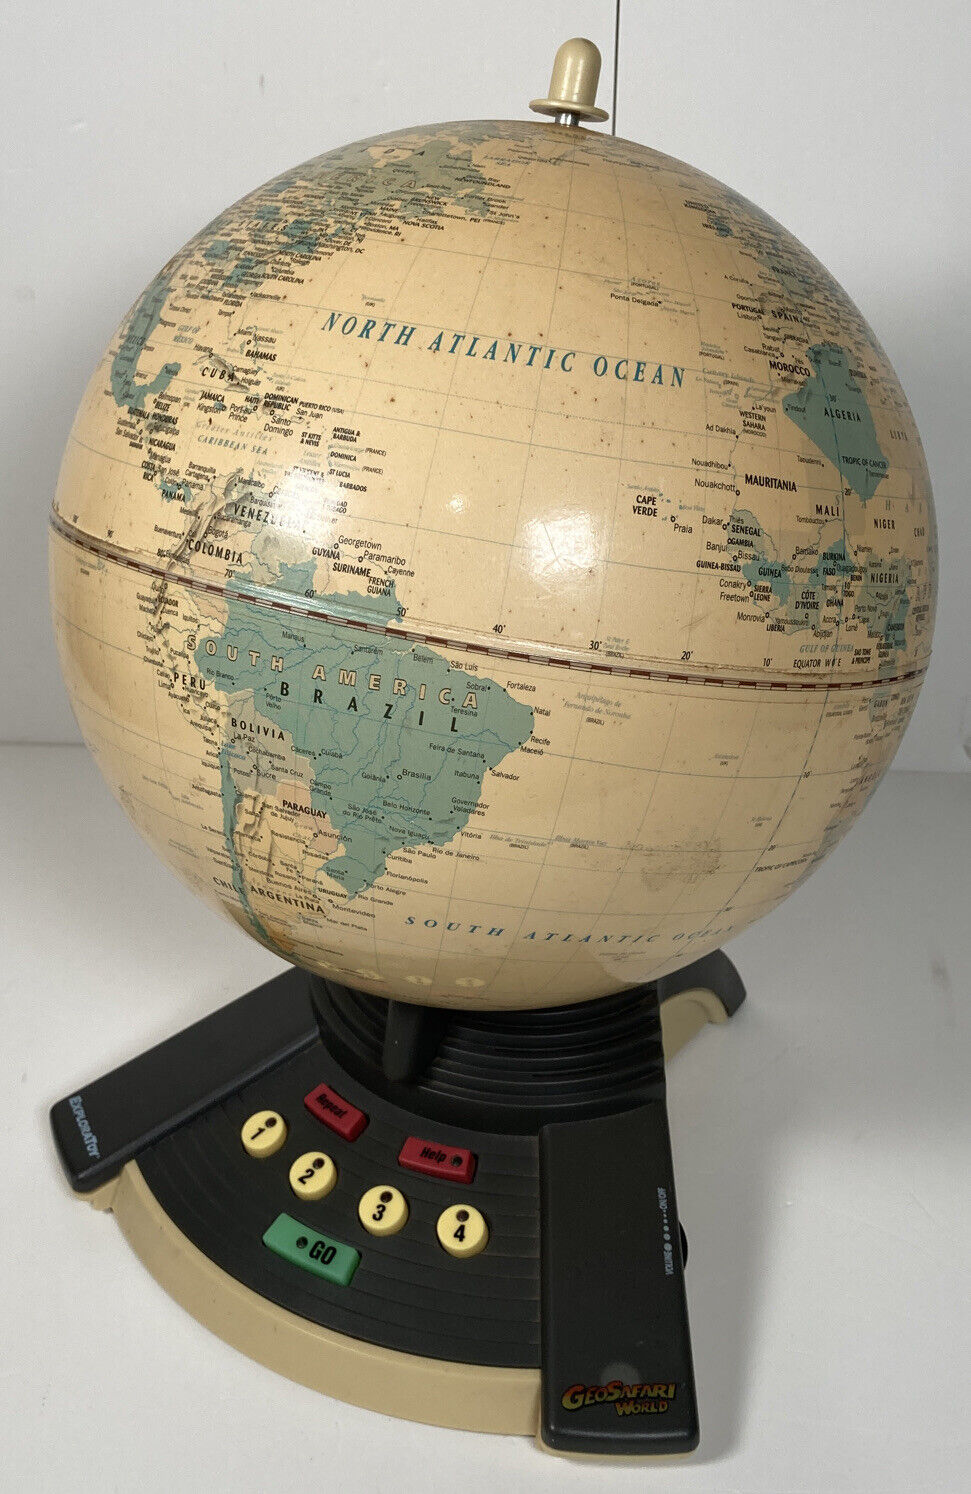 Geosafari World Exploratoy Model 6498 Electronic Talking Globe Geography Game